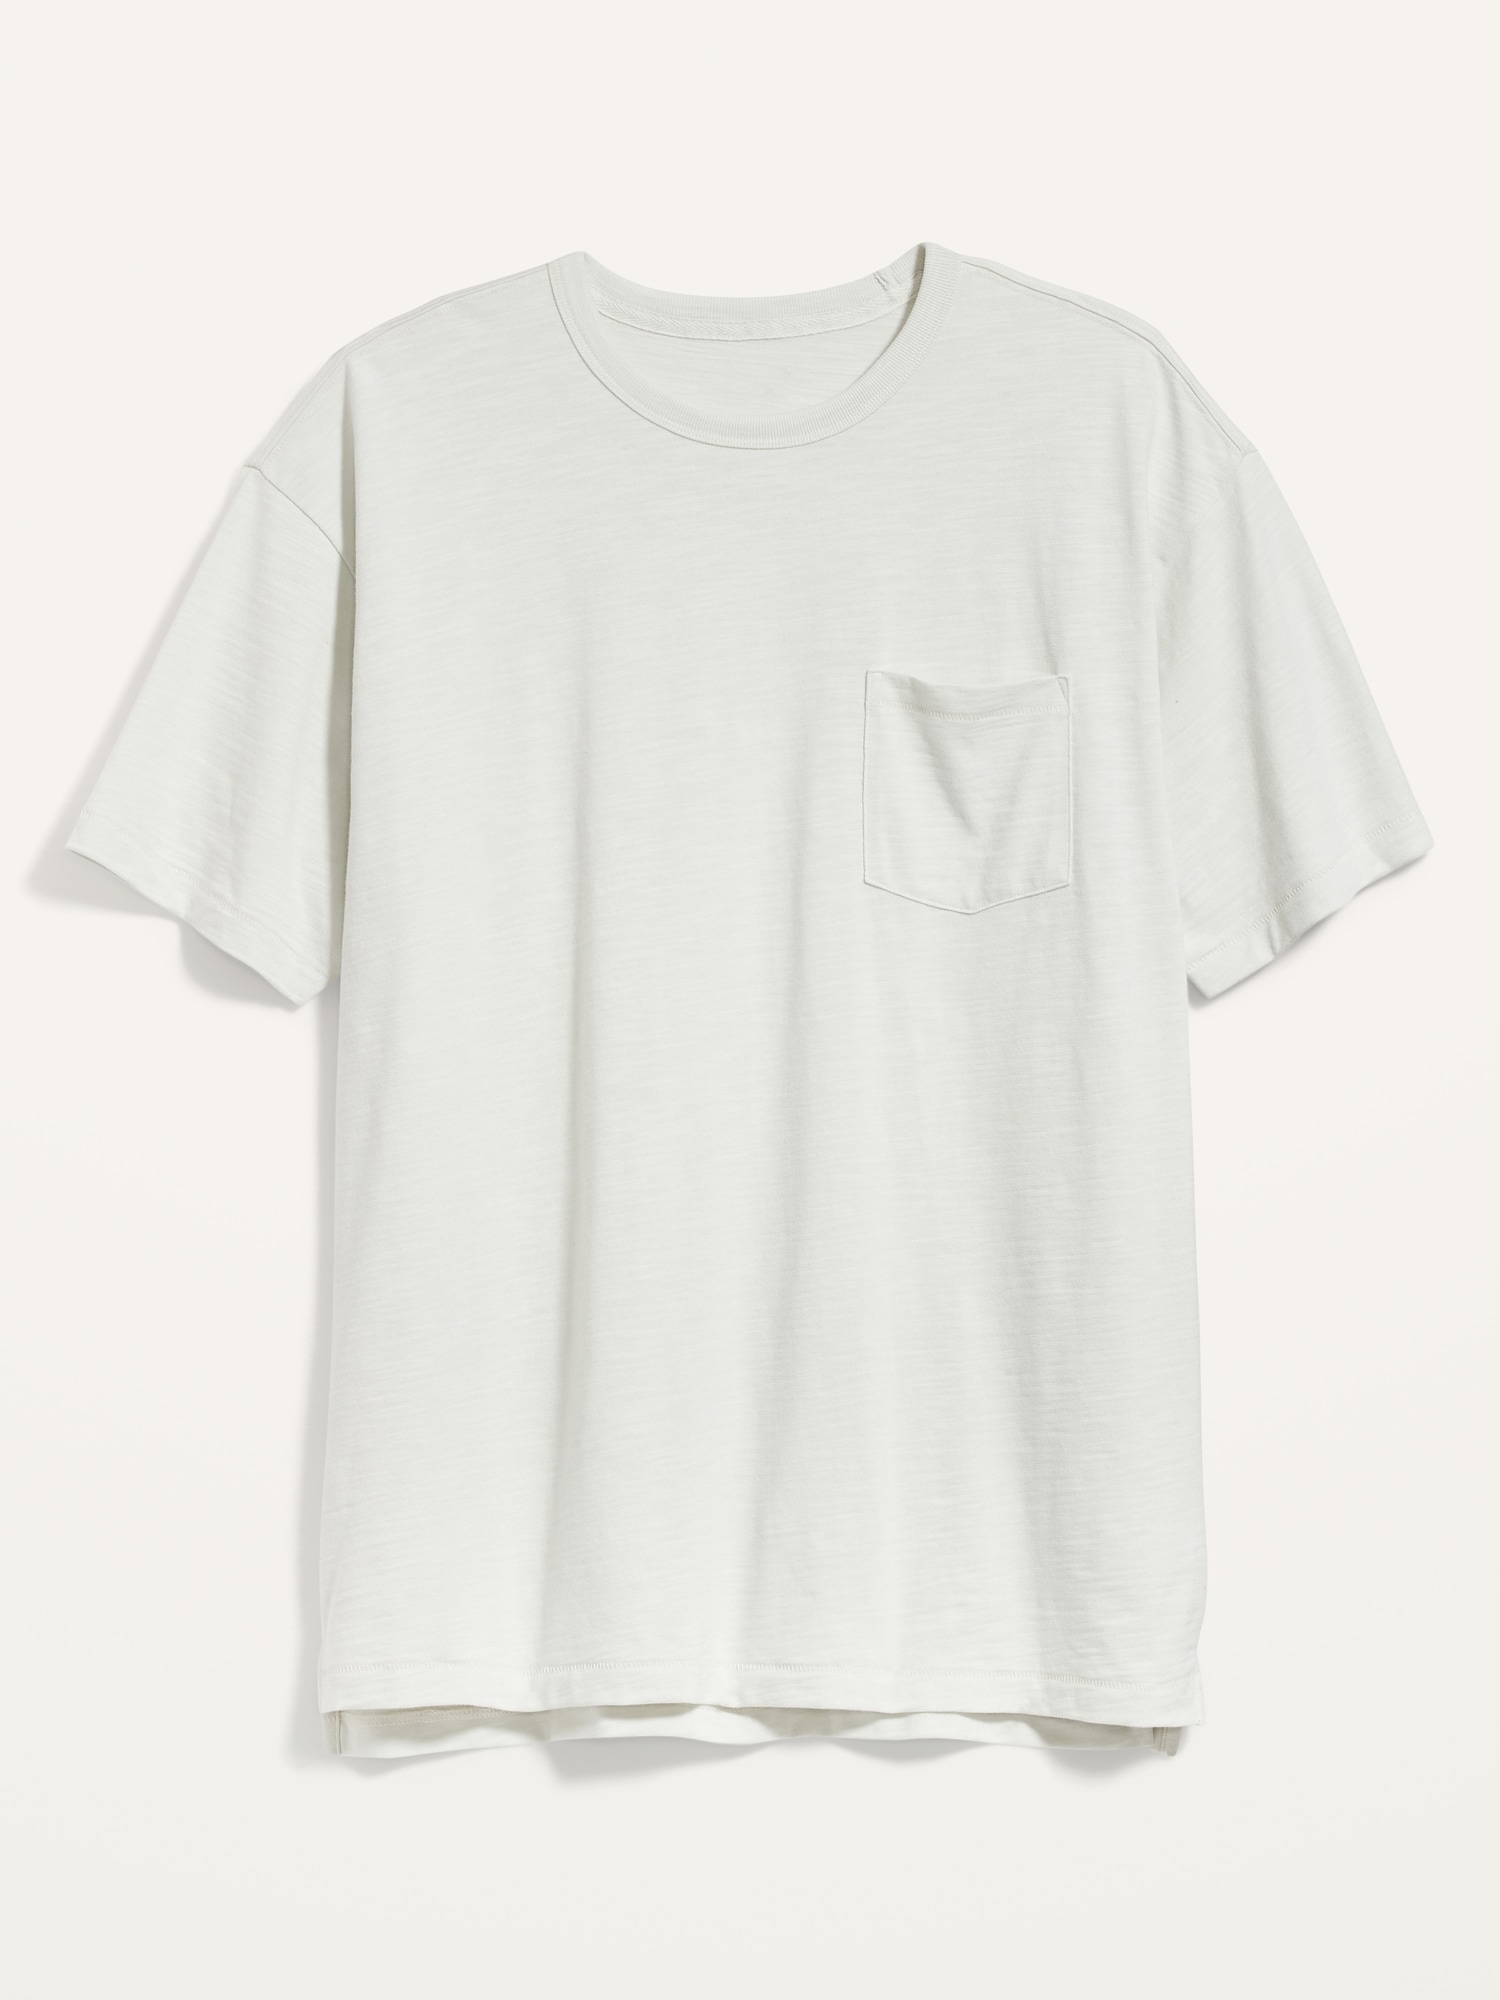 Oversized Slub-Knit Pocket T-Shirt for Men